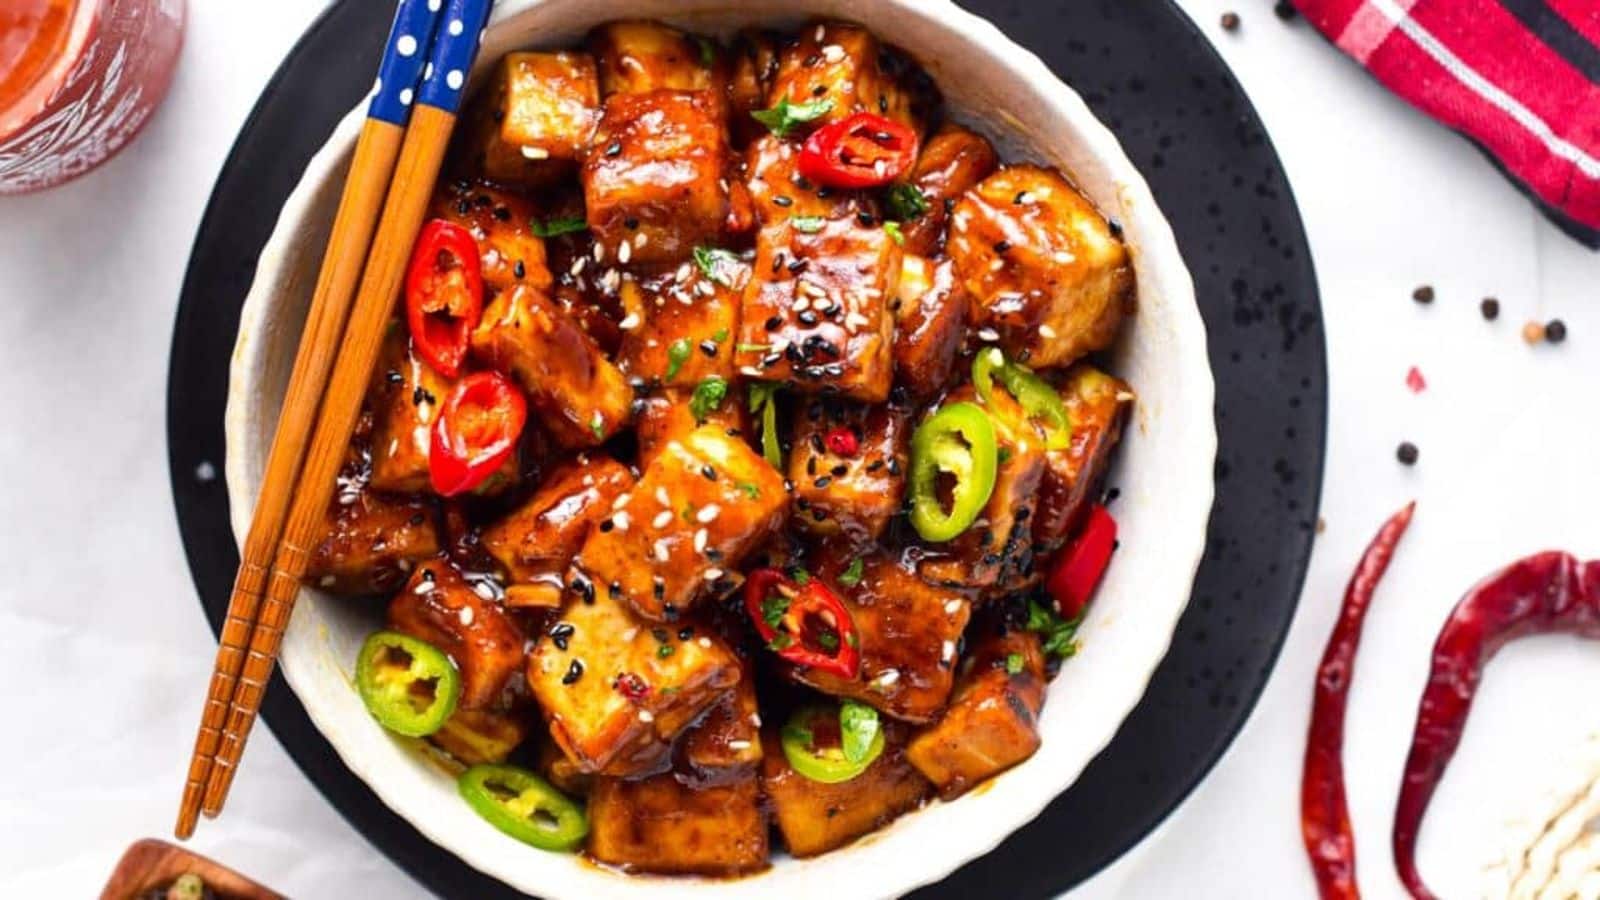 Make tangy szechuan tofu stir-fry with this recipe